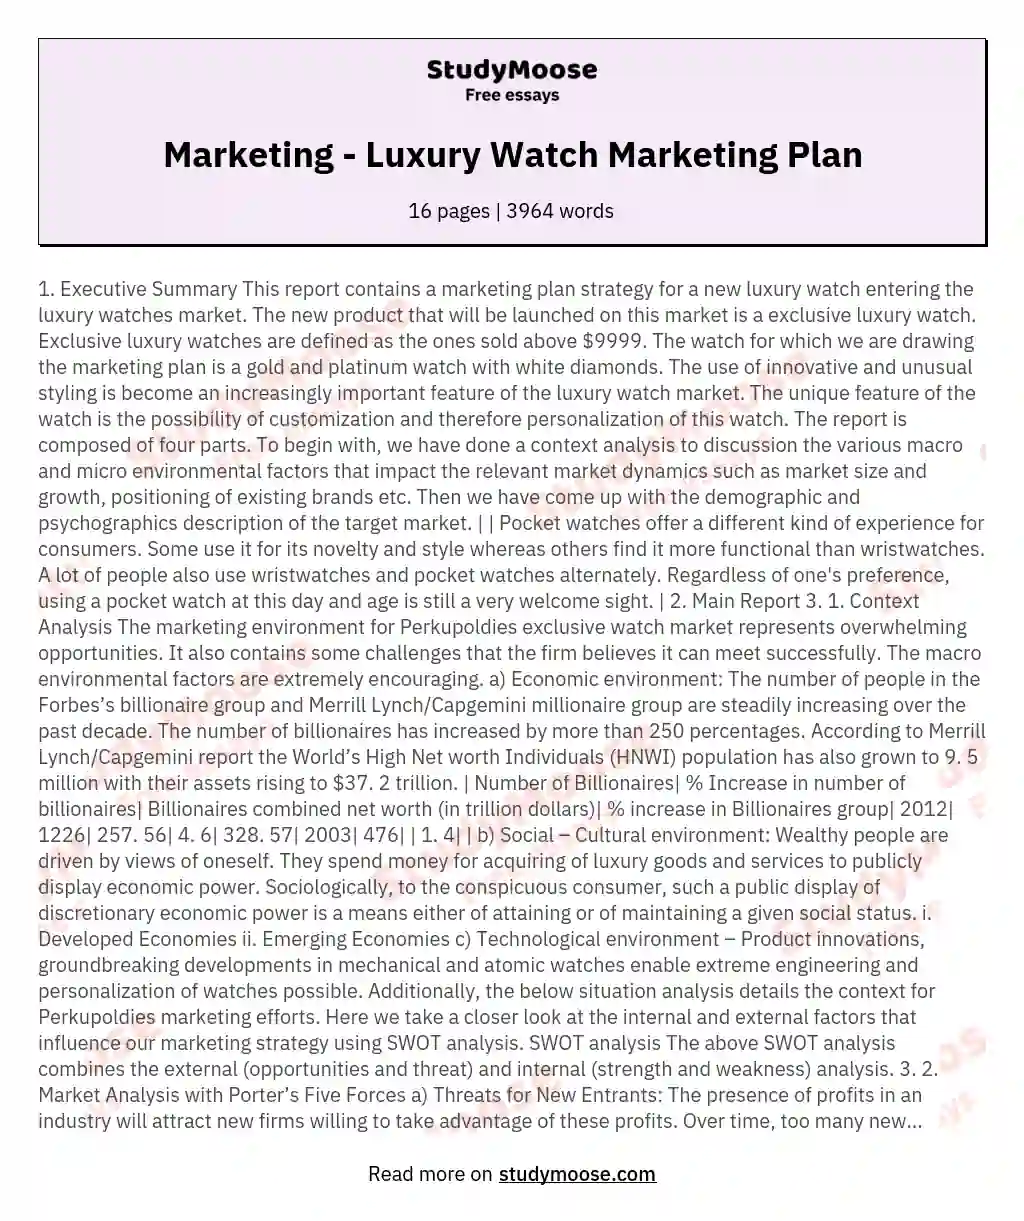 Marketing - Luxury Watch Marketing Plan